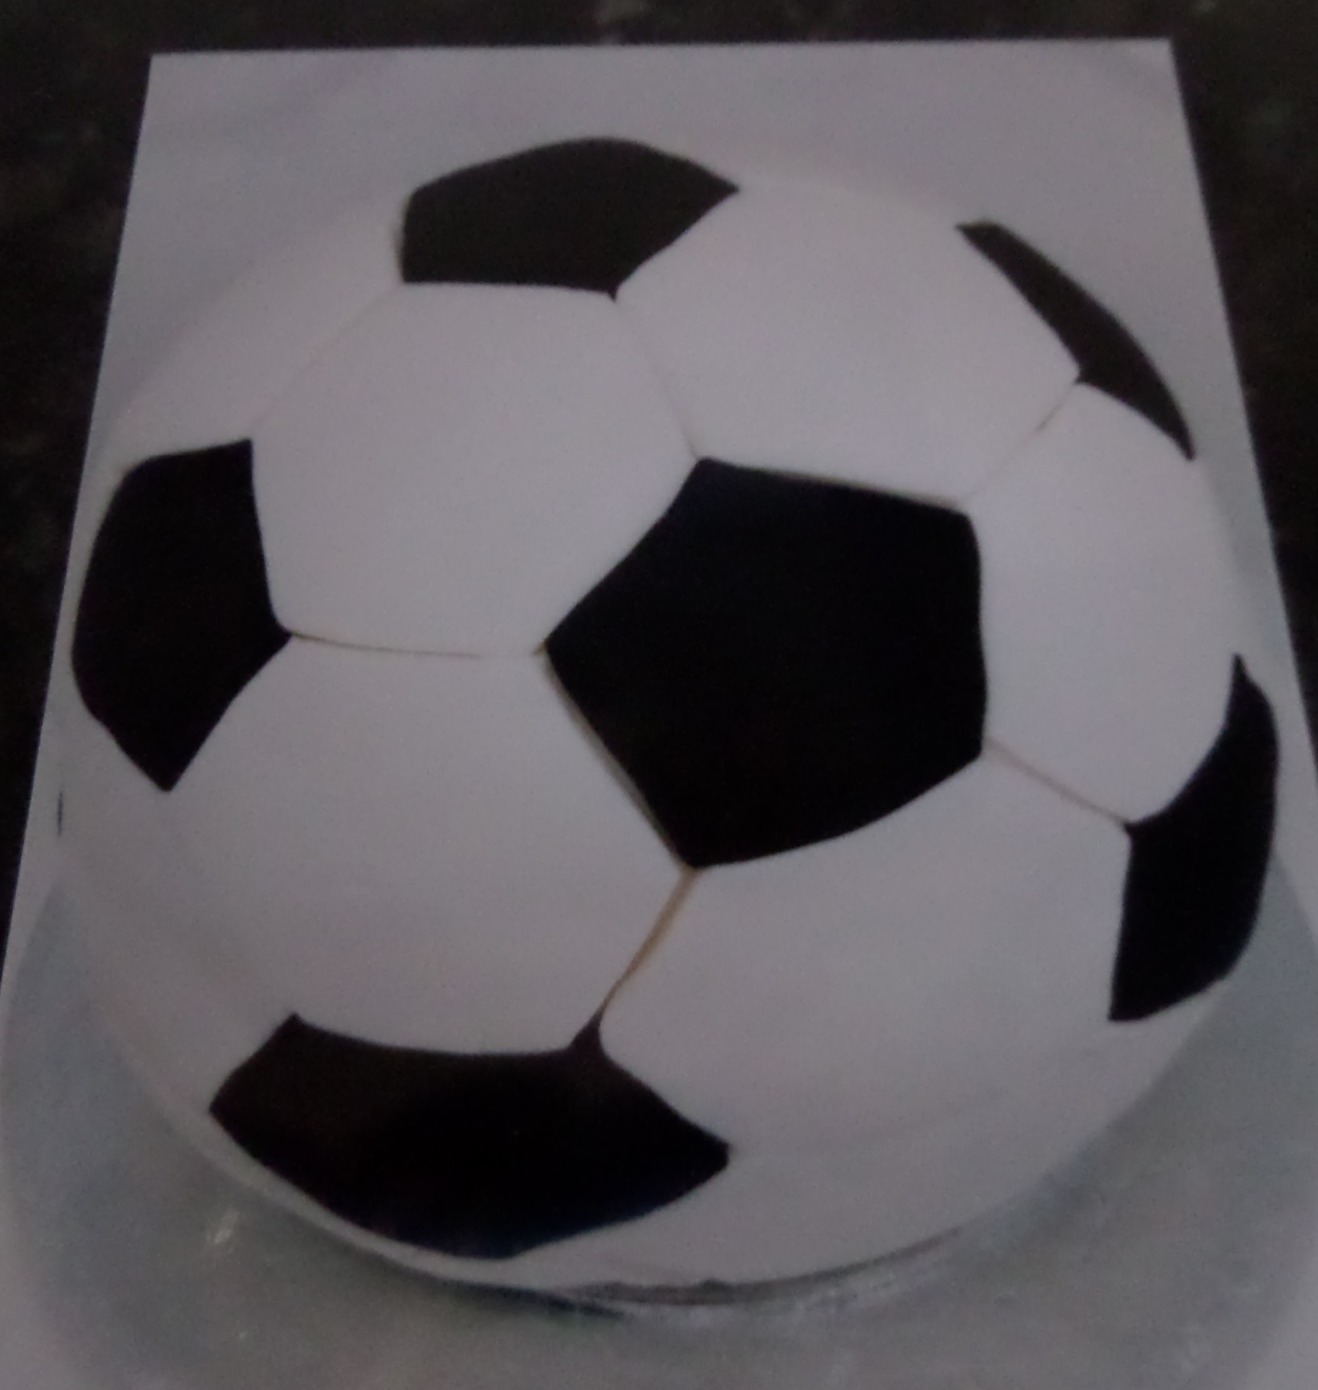 round sphere 3D football birthday cake